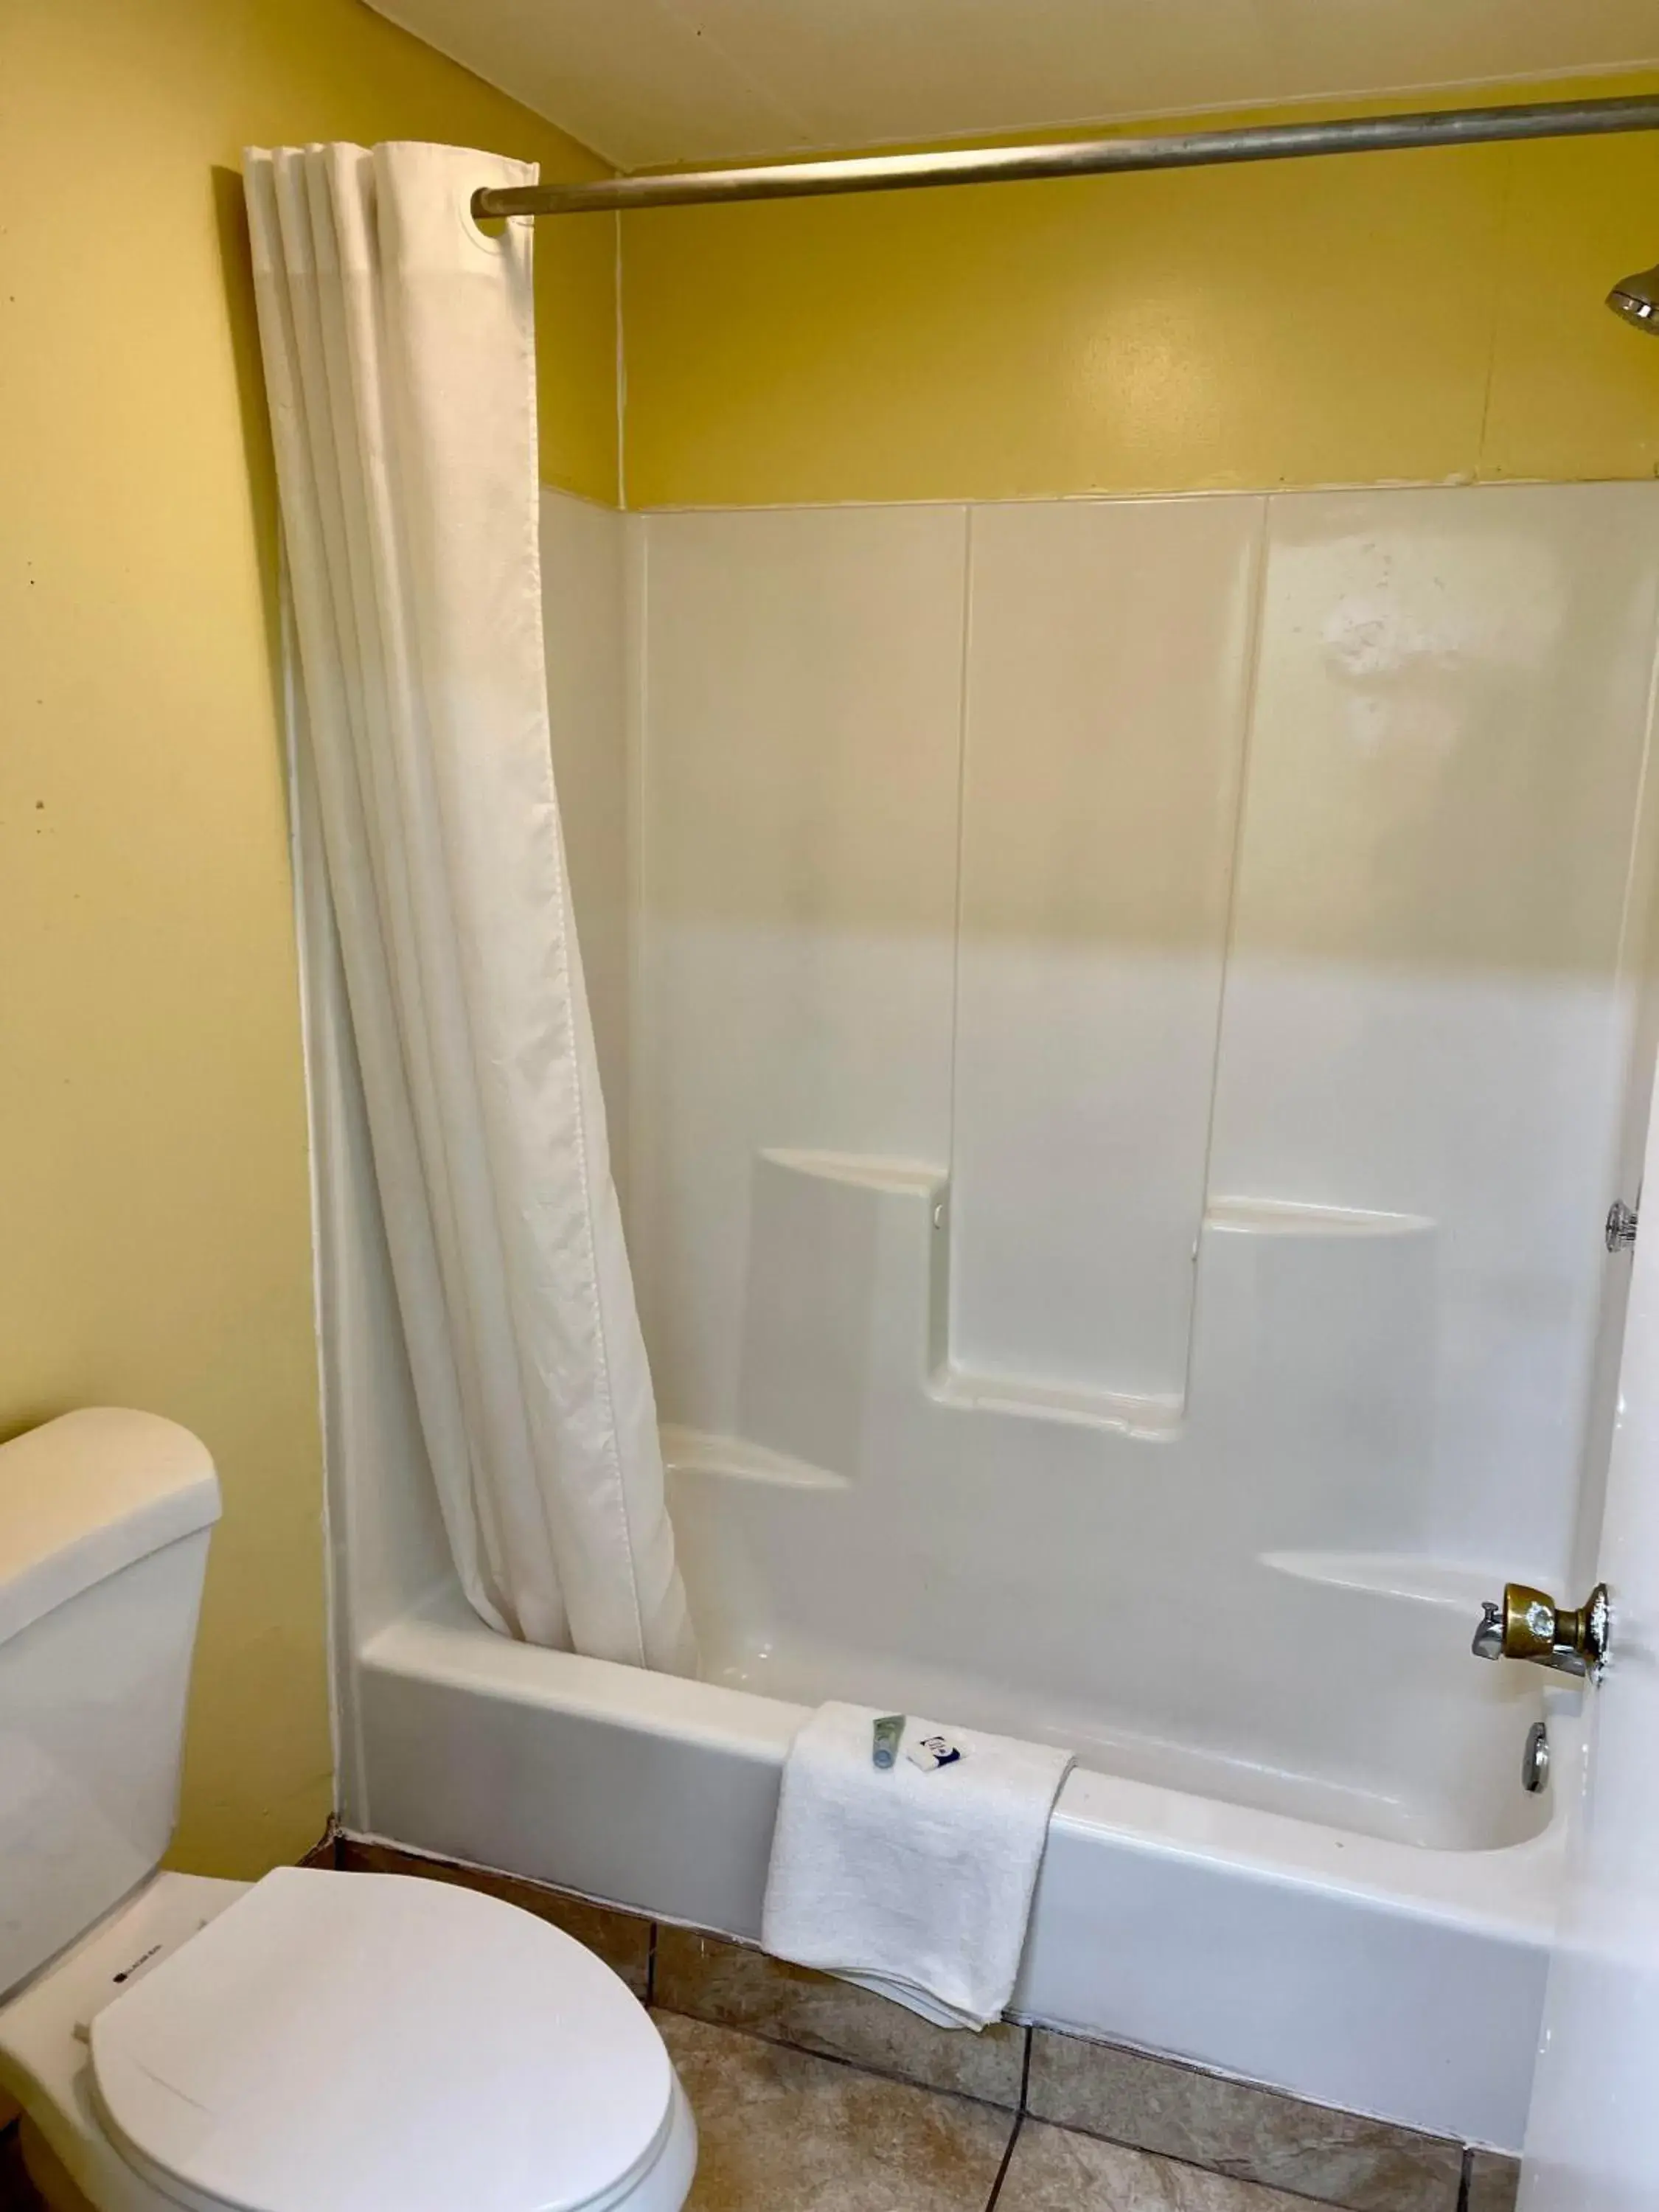 Bathroom in Economy Motel